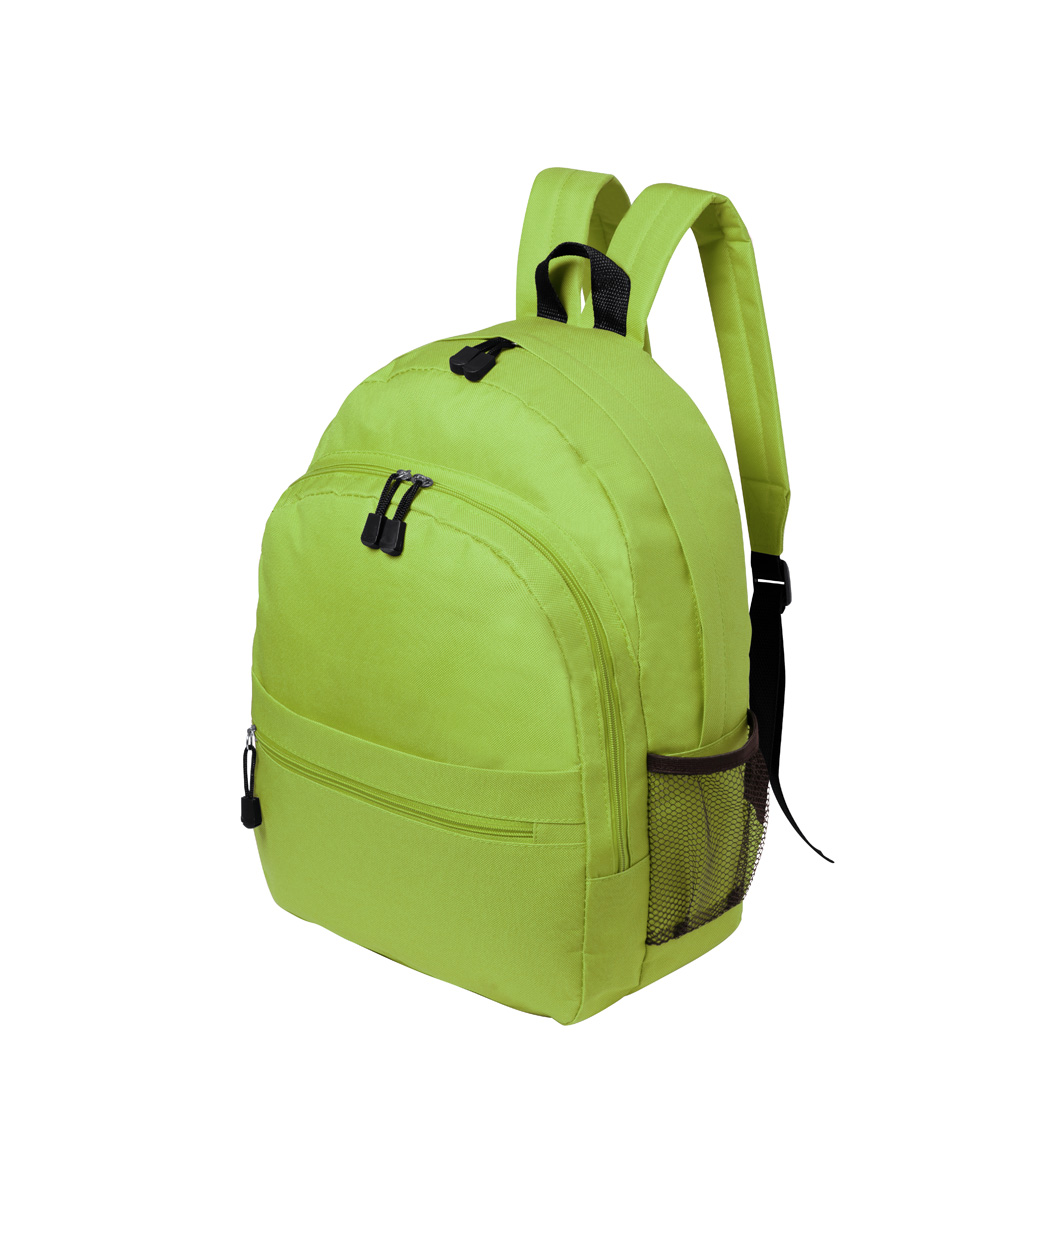 Ventix backpack - lime